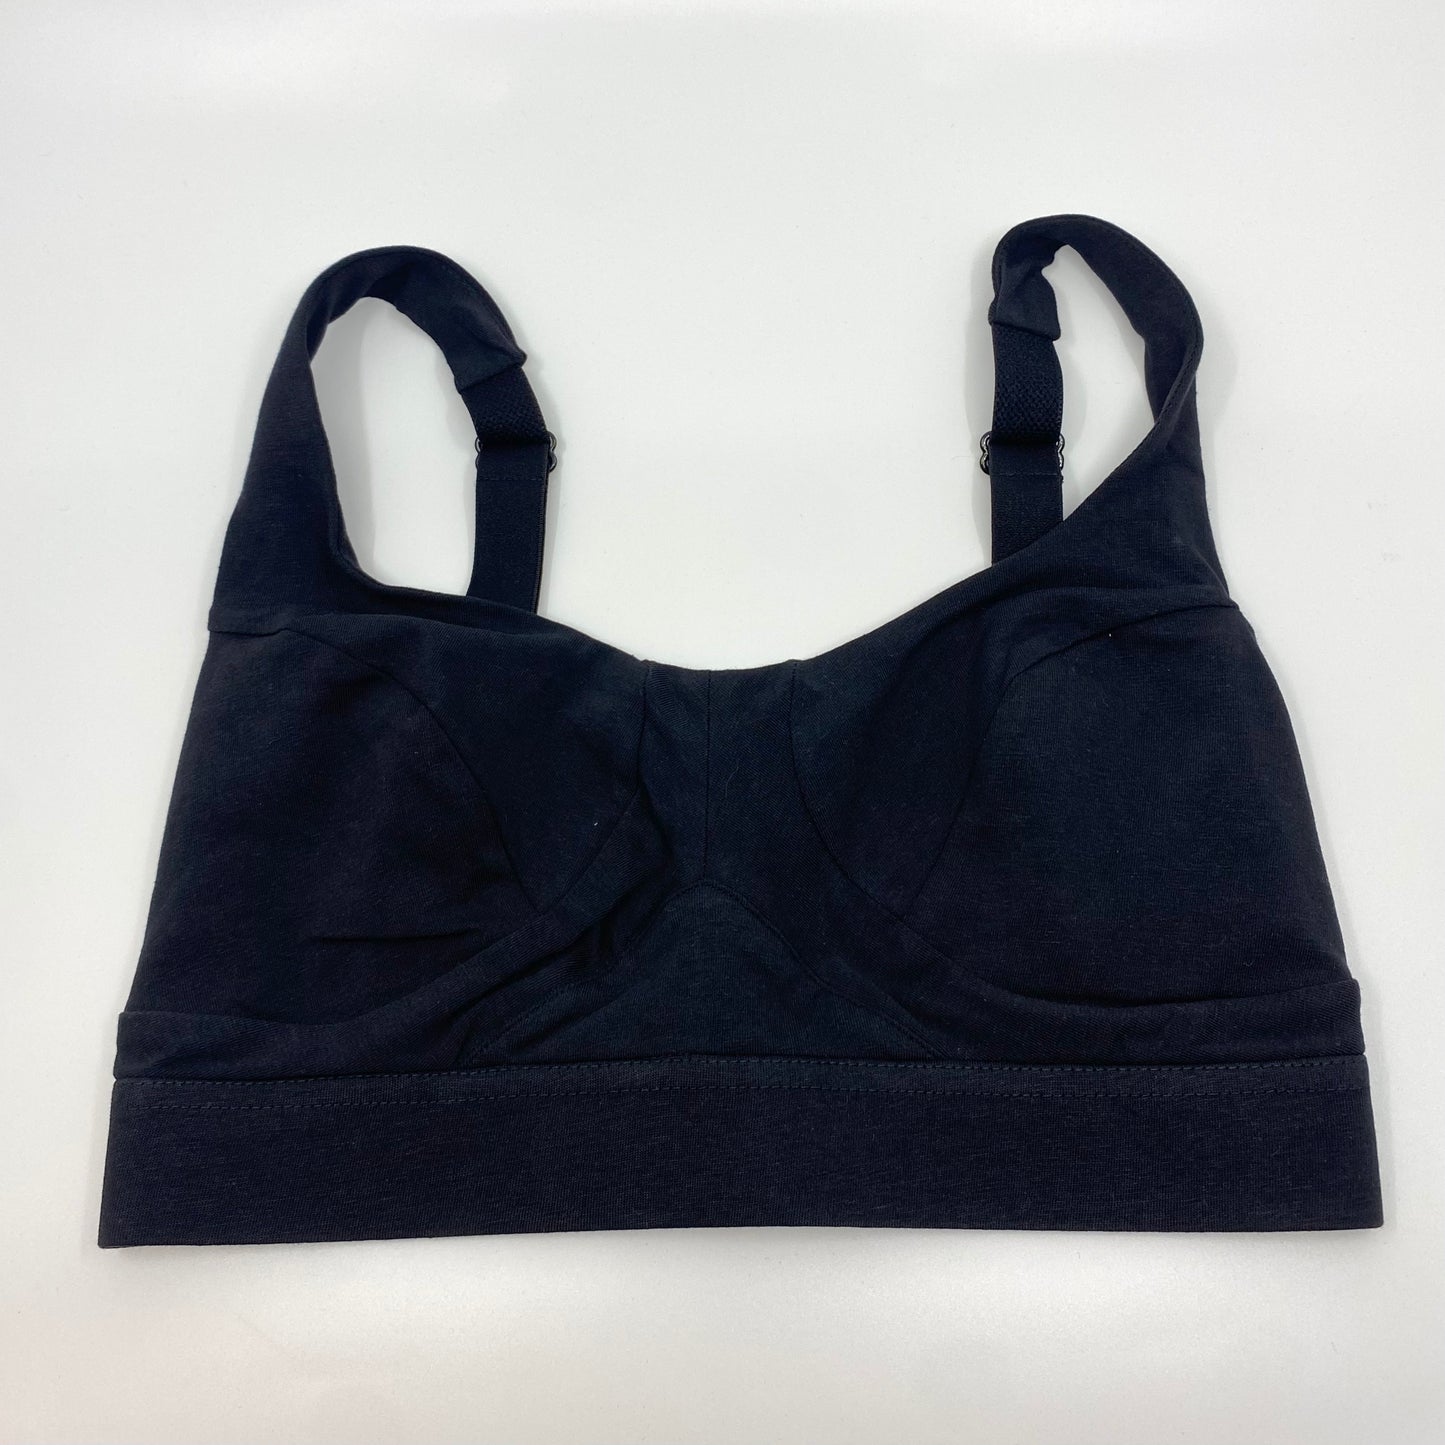 Women's organic cotton bra in black - more supportive style